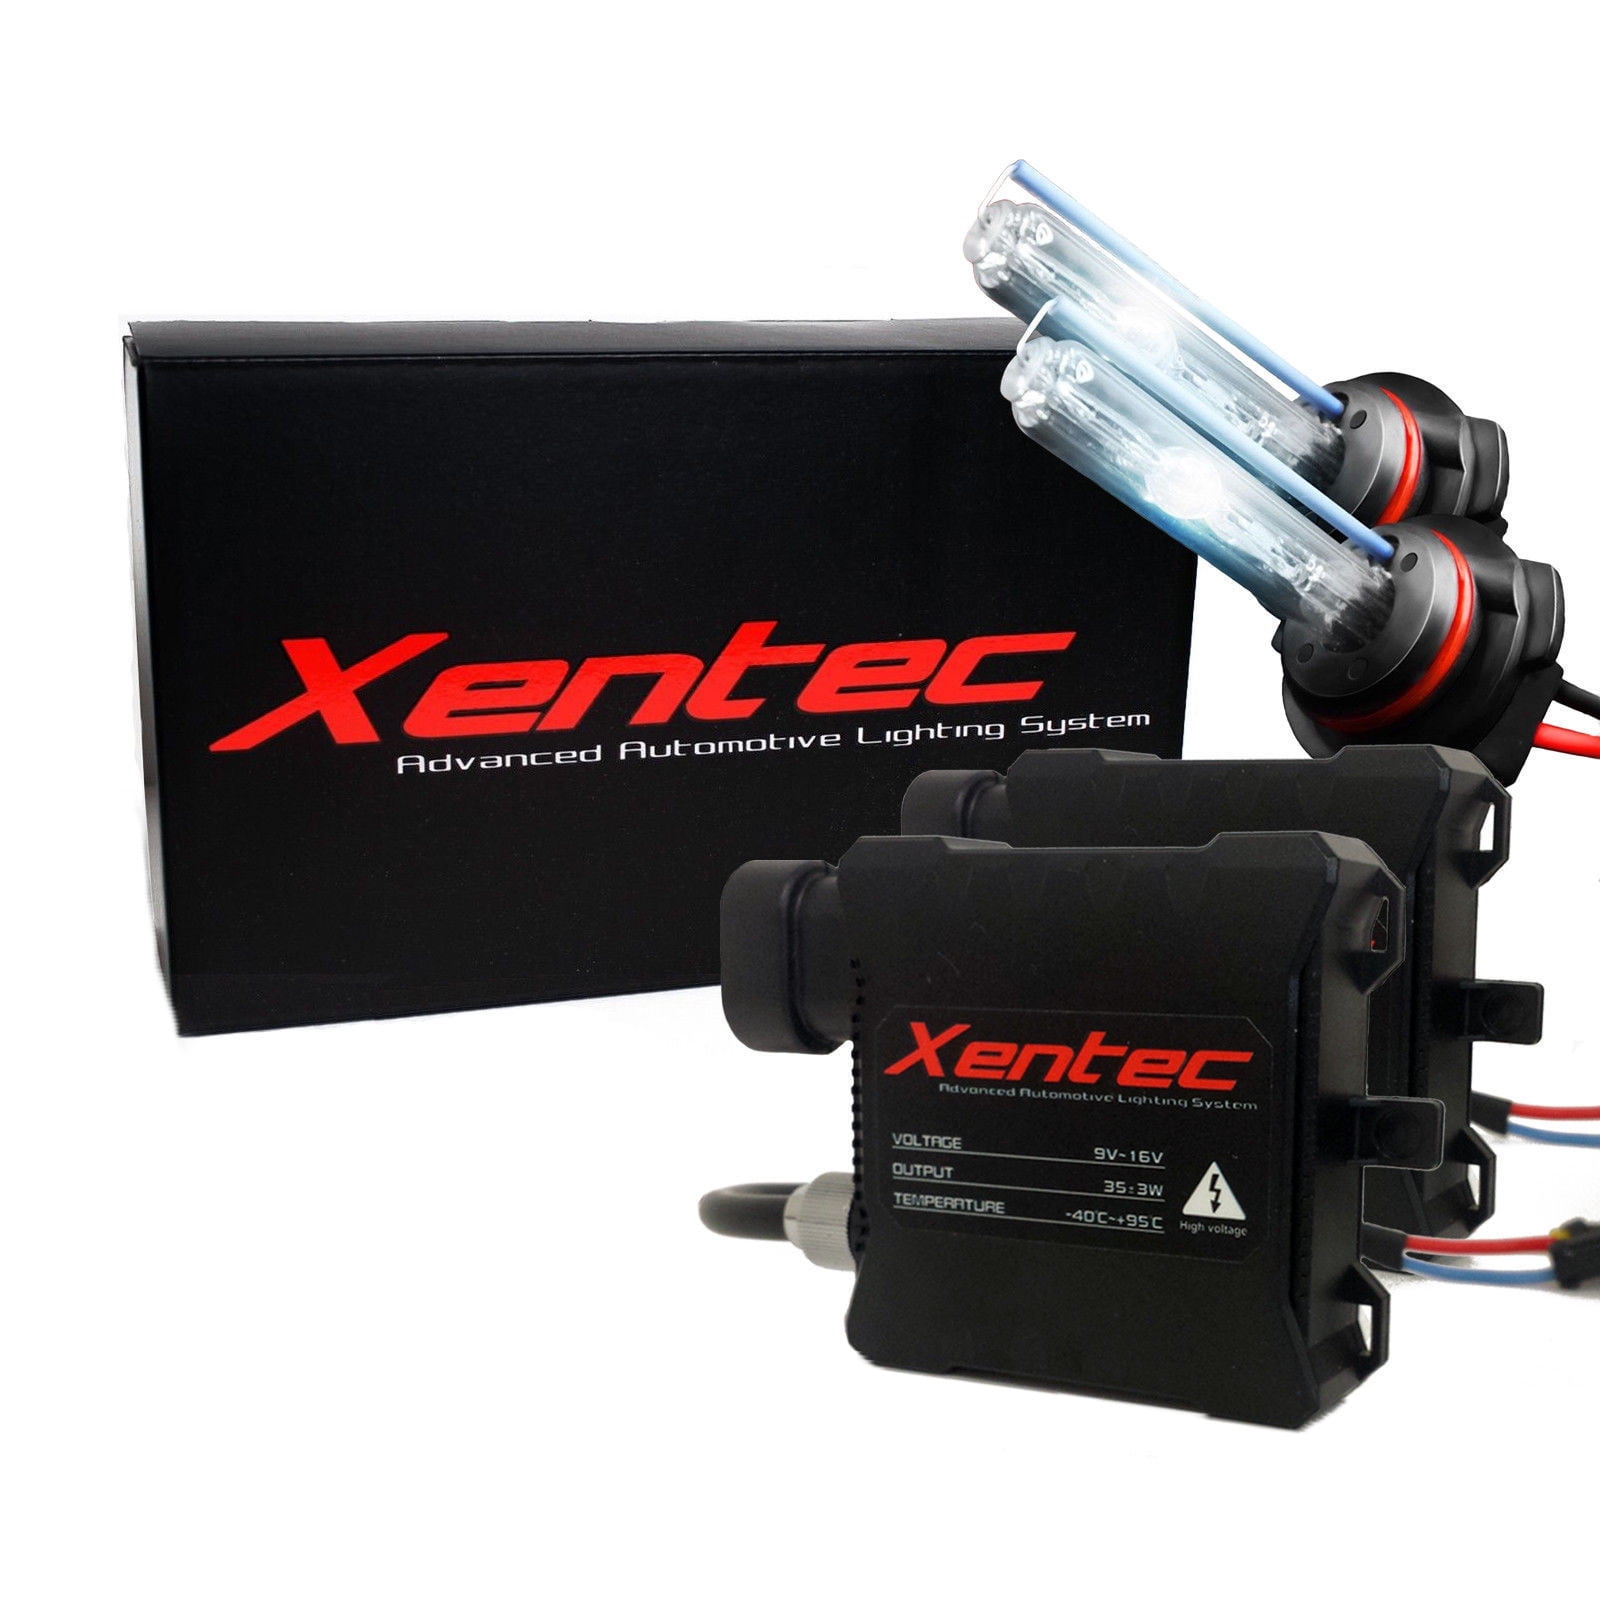 Xentec H13 Xenon Light HID Conversion Kit Hi&Lo 55W for Headlight 6K 9008 big01 